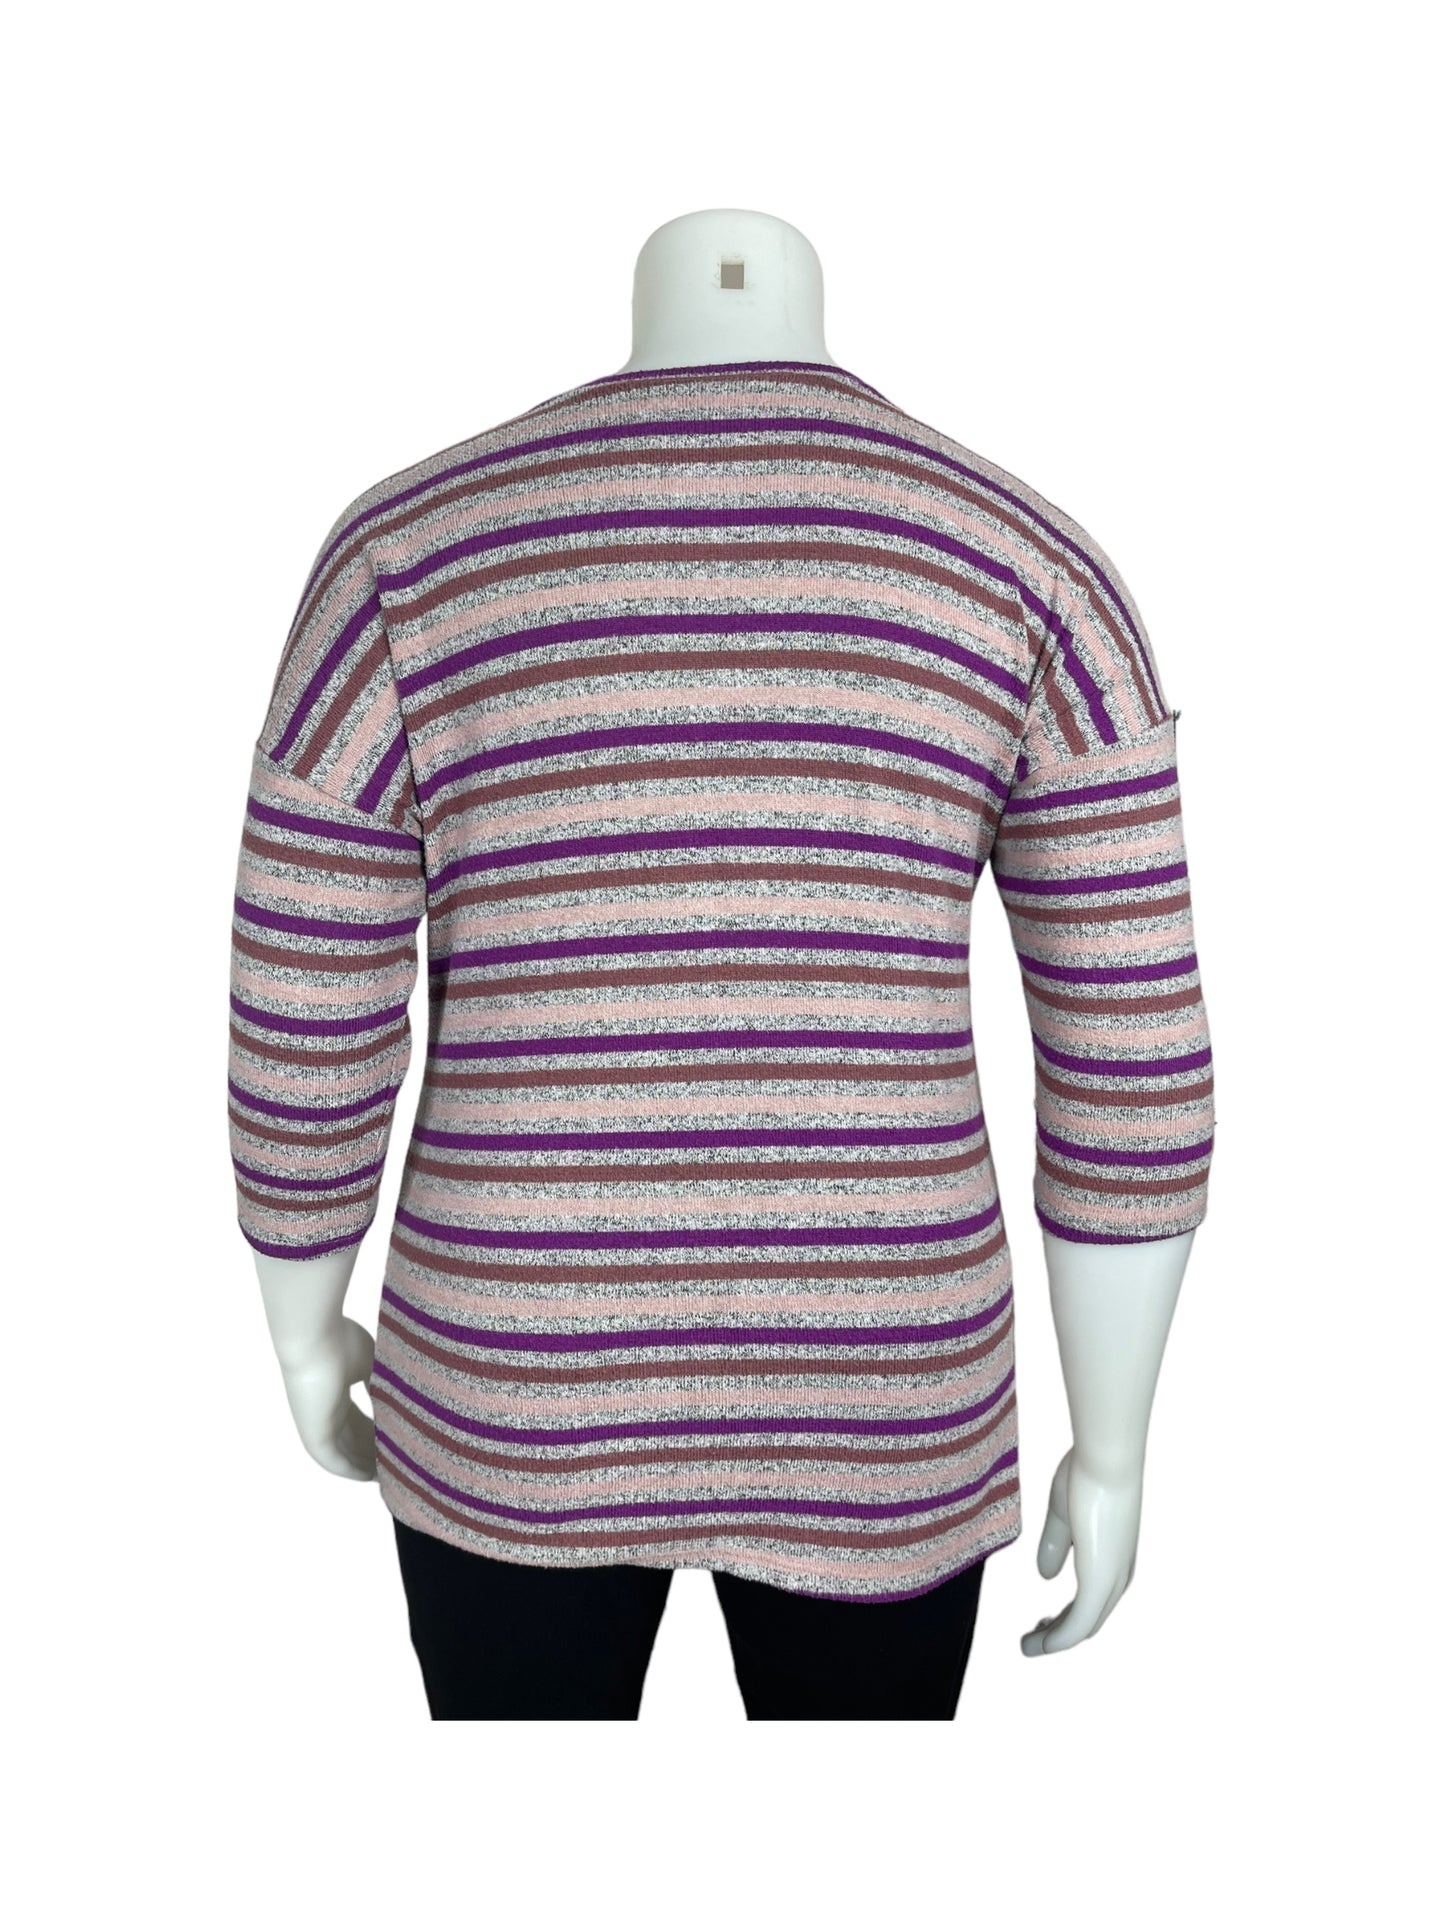 “Torrid” Pink Stripes on Grey Sweater (1)